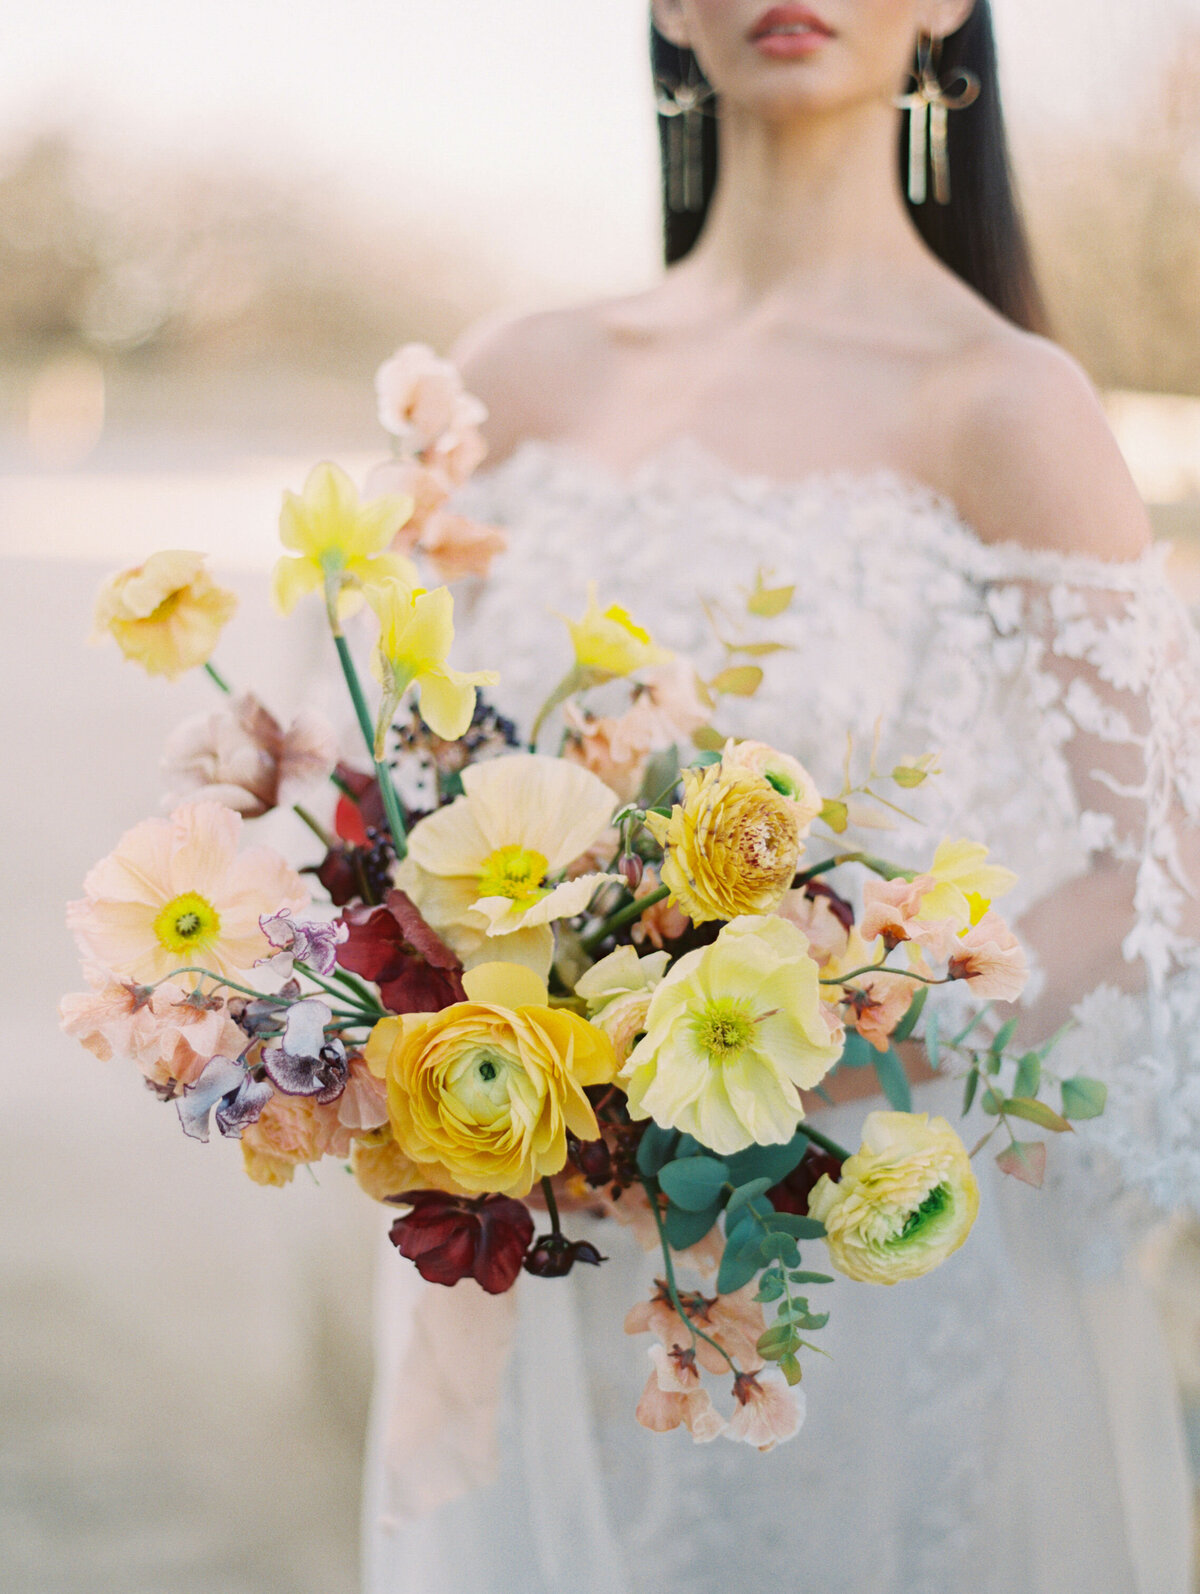 max-owens-design-flower-installations-wedding-02-multicolor-bouquet